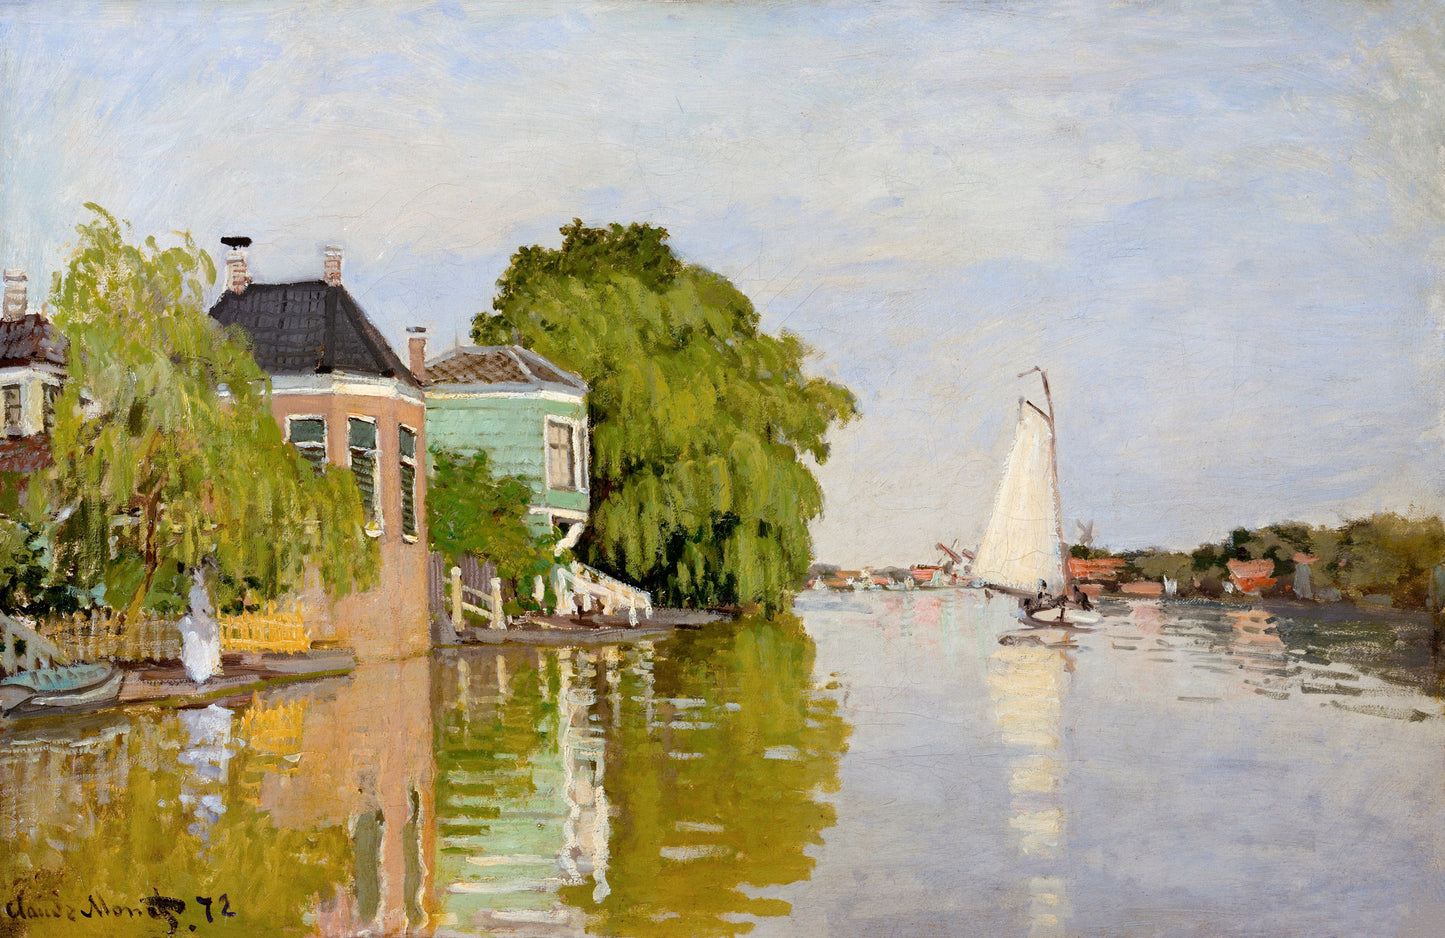 Claude Monet - Houses on the Achterzaan 1871 - Digital Art - JPG File Download